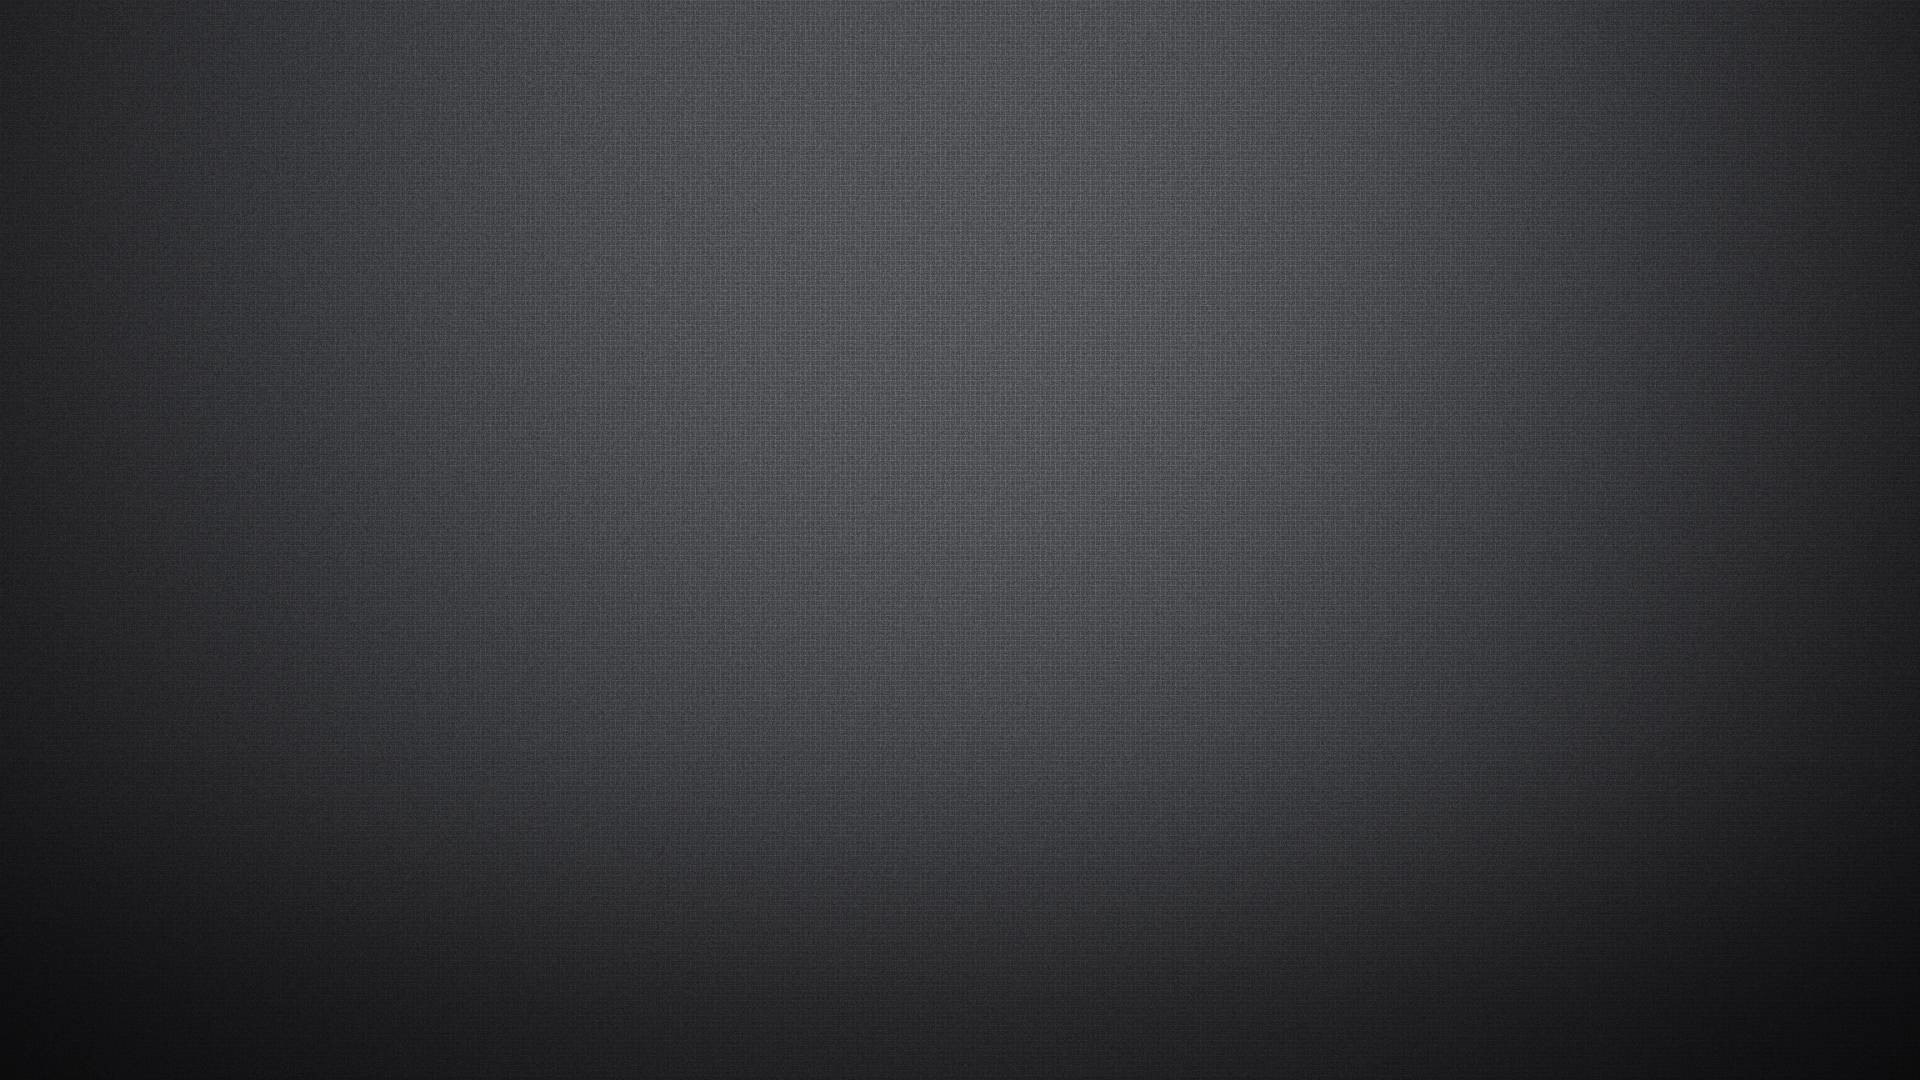 1920x1080 Wallpaper Grey And Black